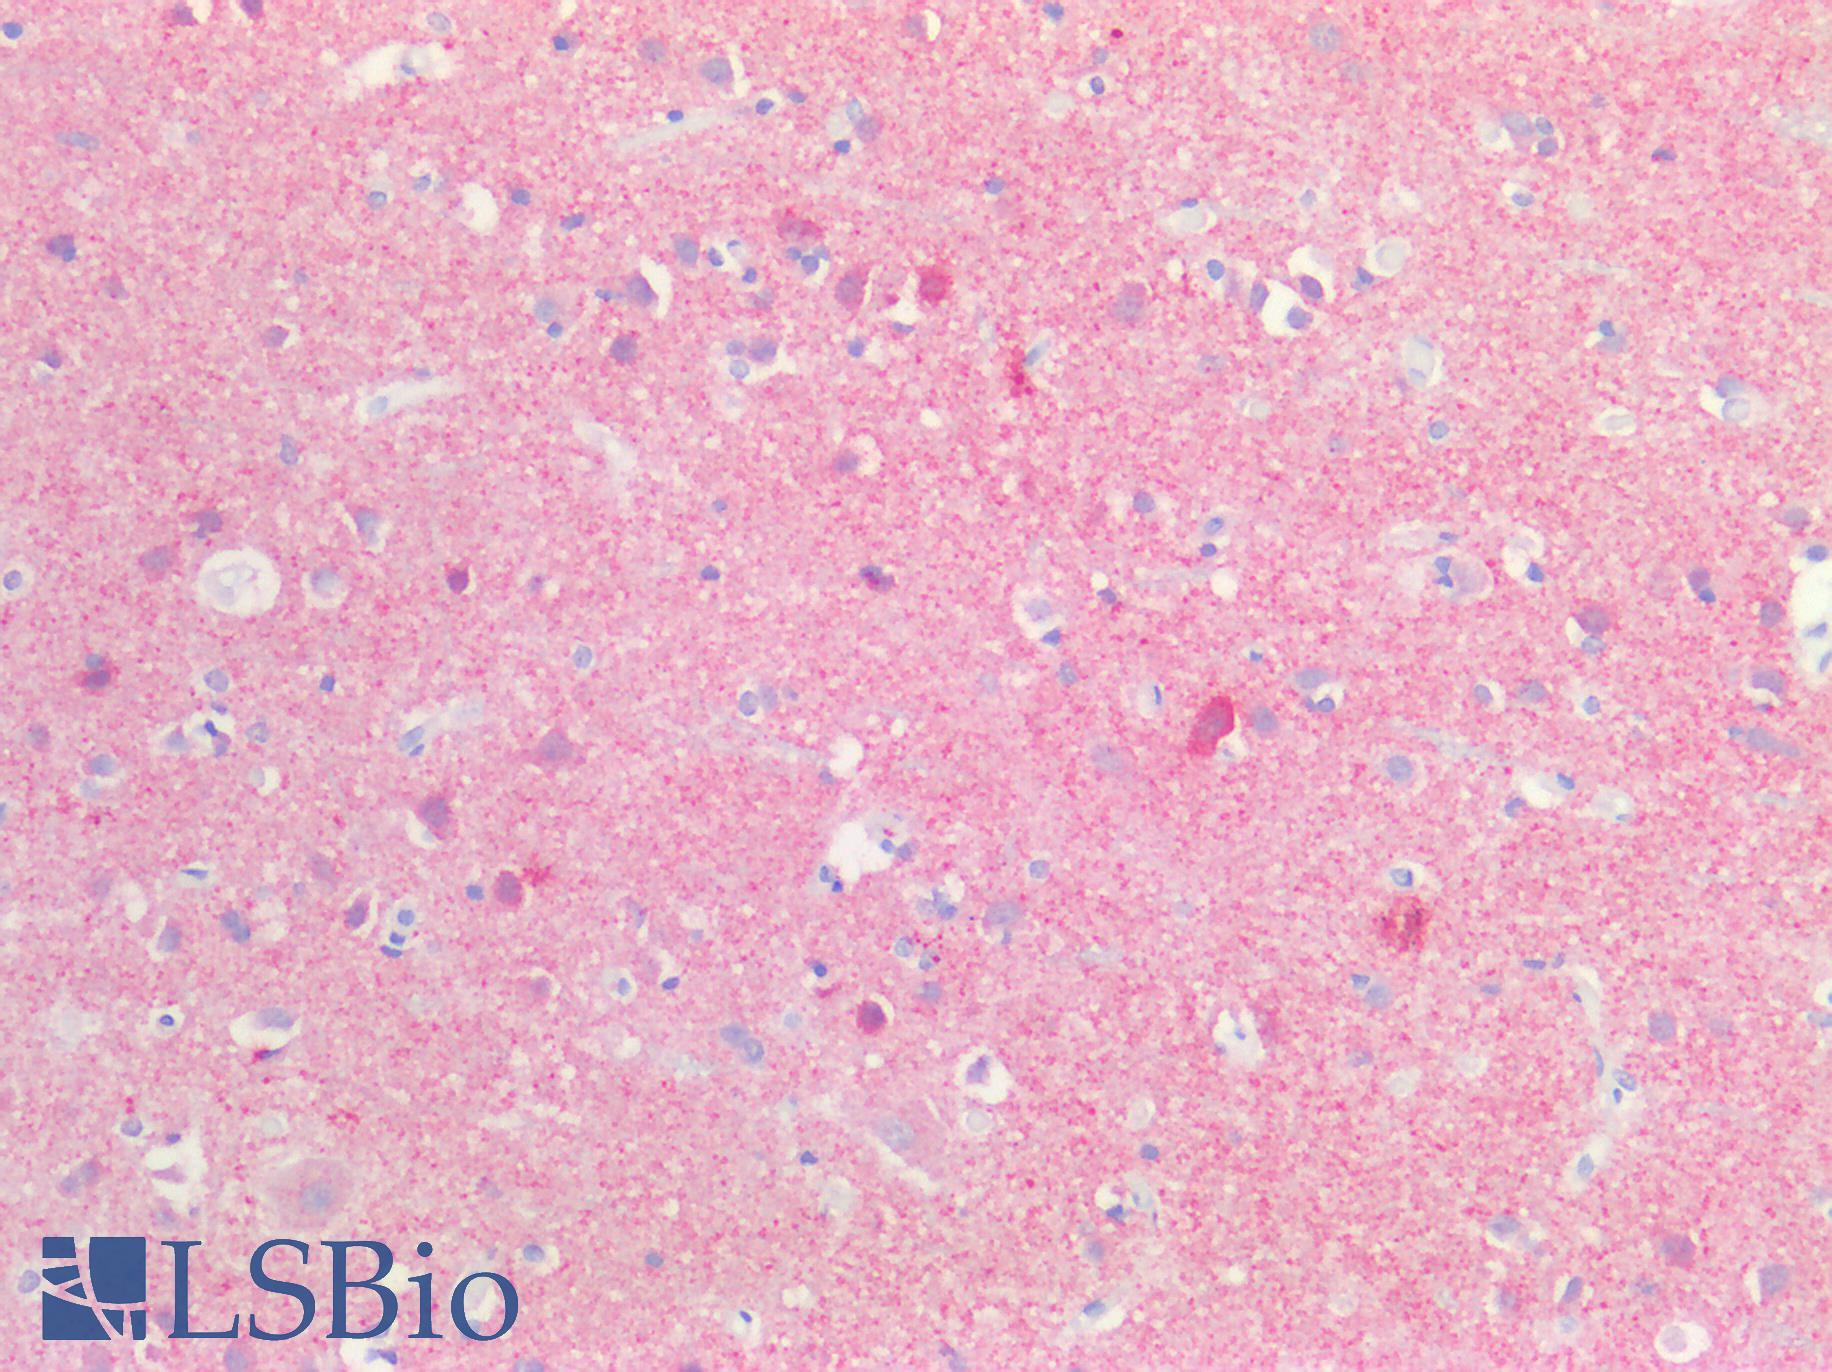 SNCA / Alpha-Synuclein Antibody - Human Brain, Cortex: Formalin-Fixed, Paraffin-Embedded (FFPE)